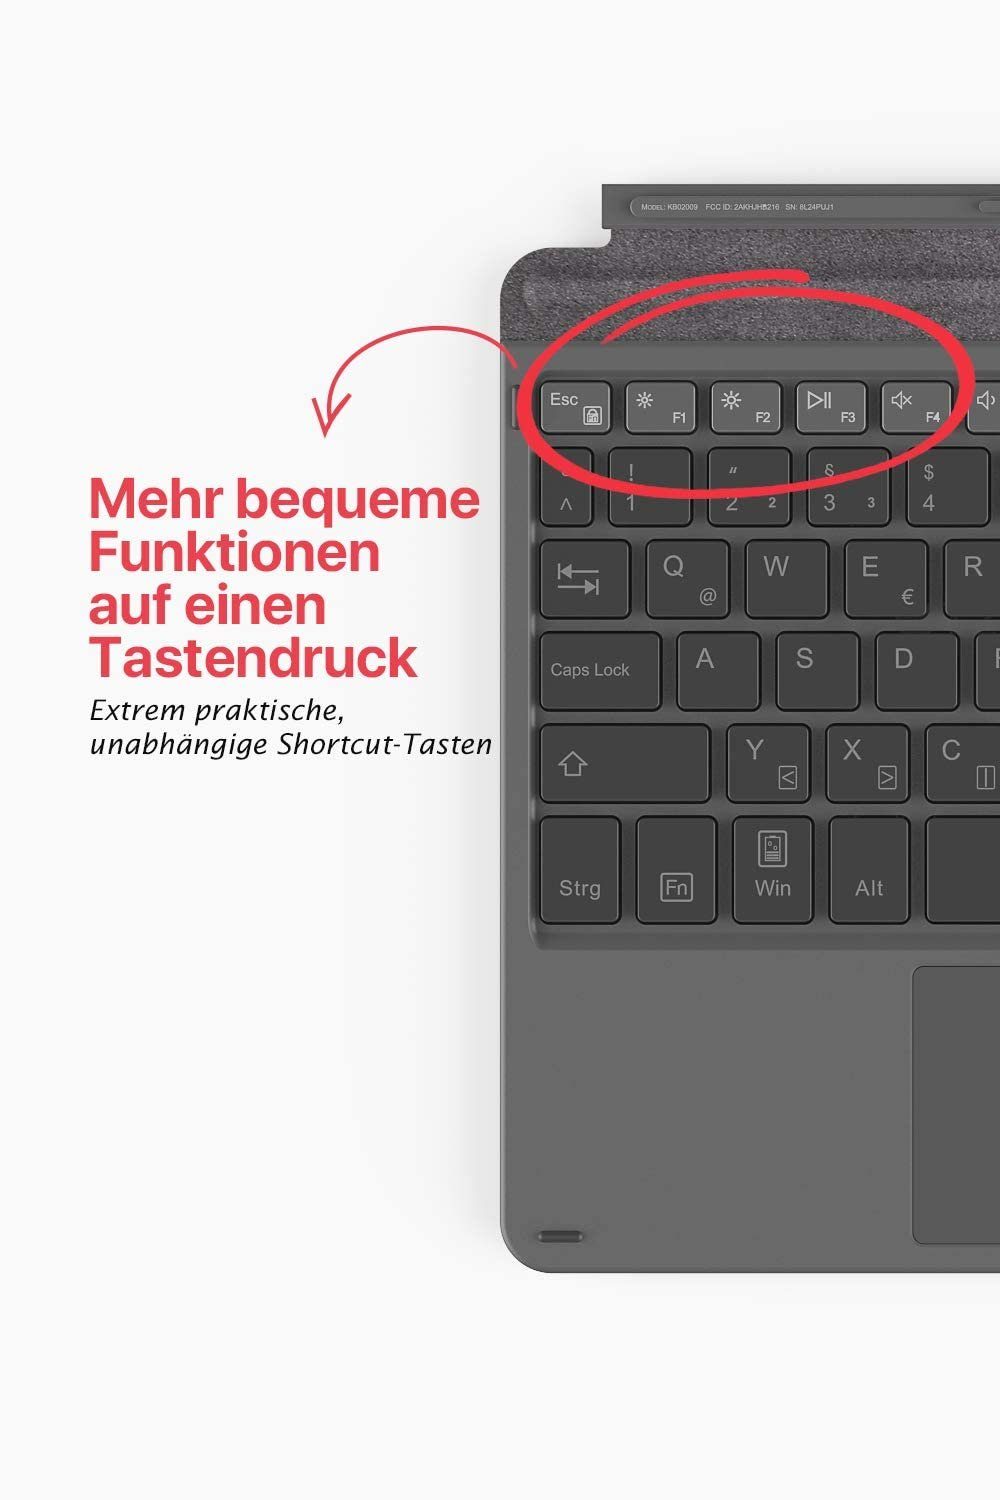 Tastatur Generation Inateck 1&2&3 Tablet-Tastatur für Surface Go